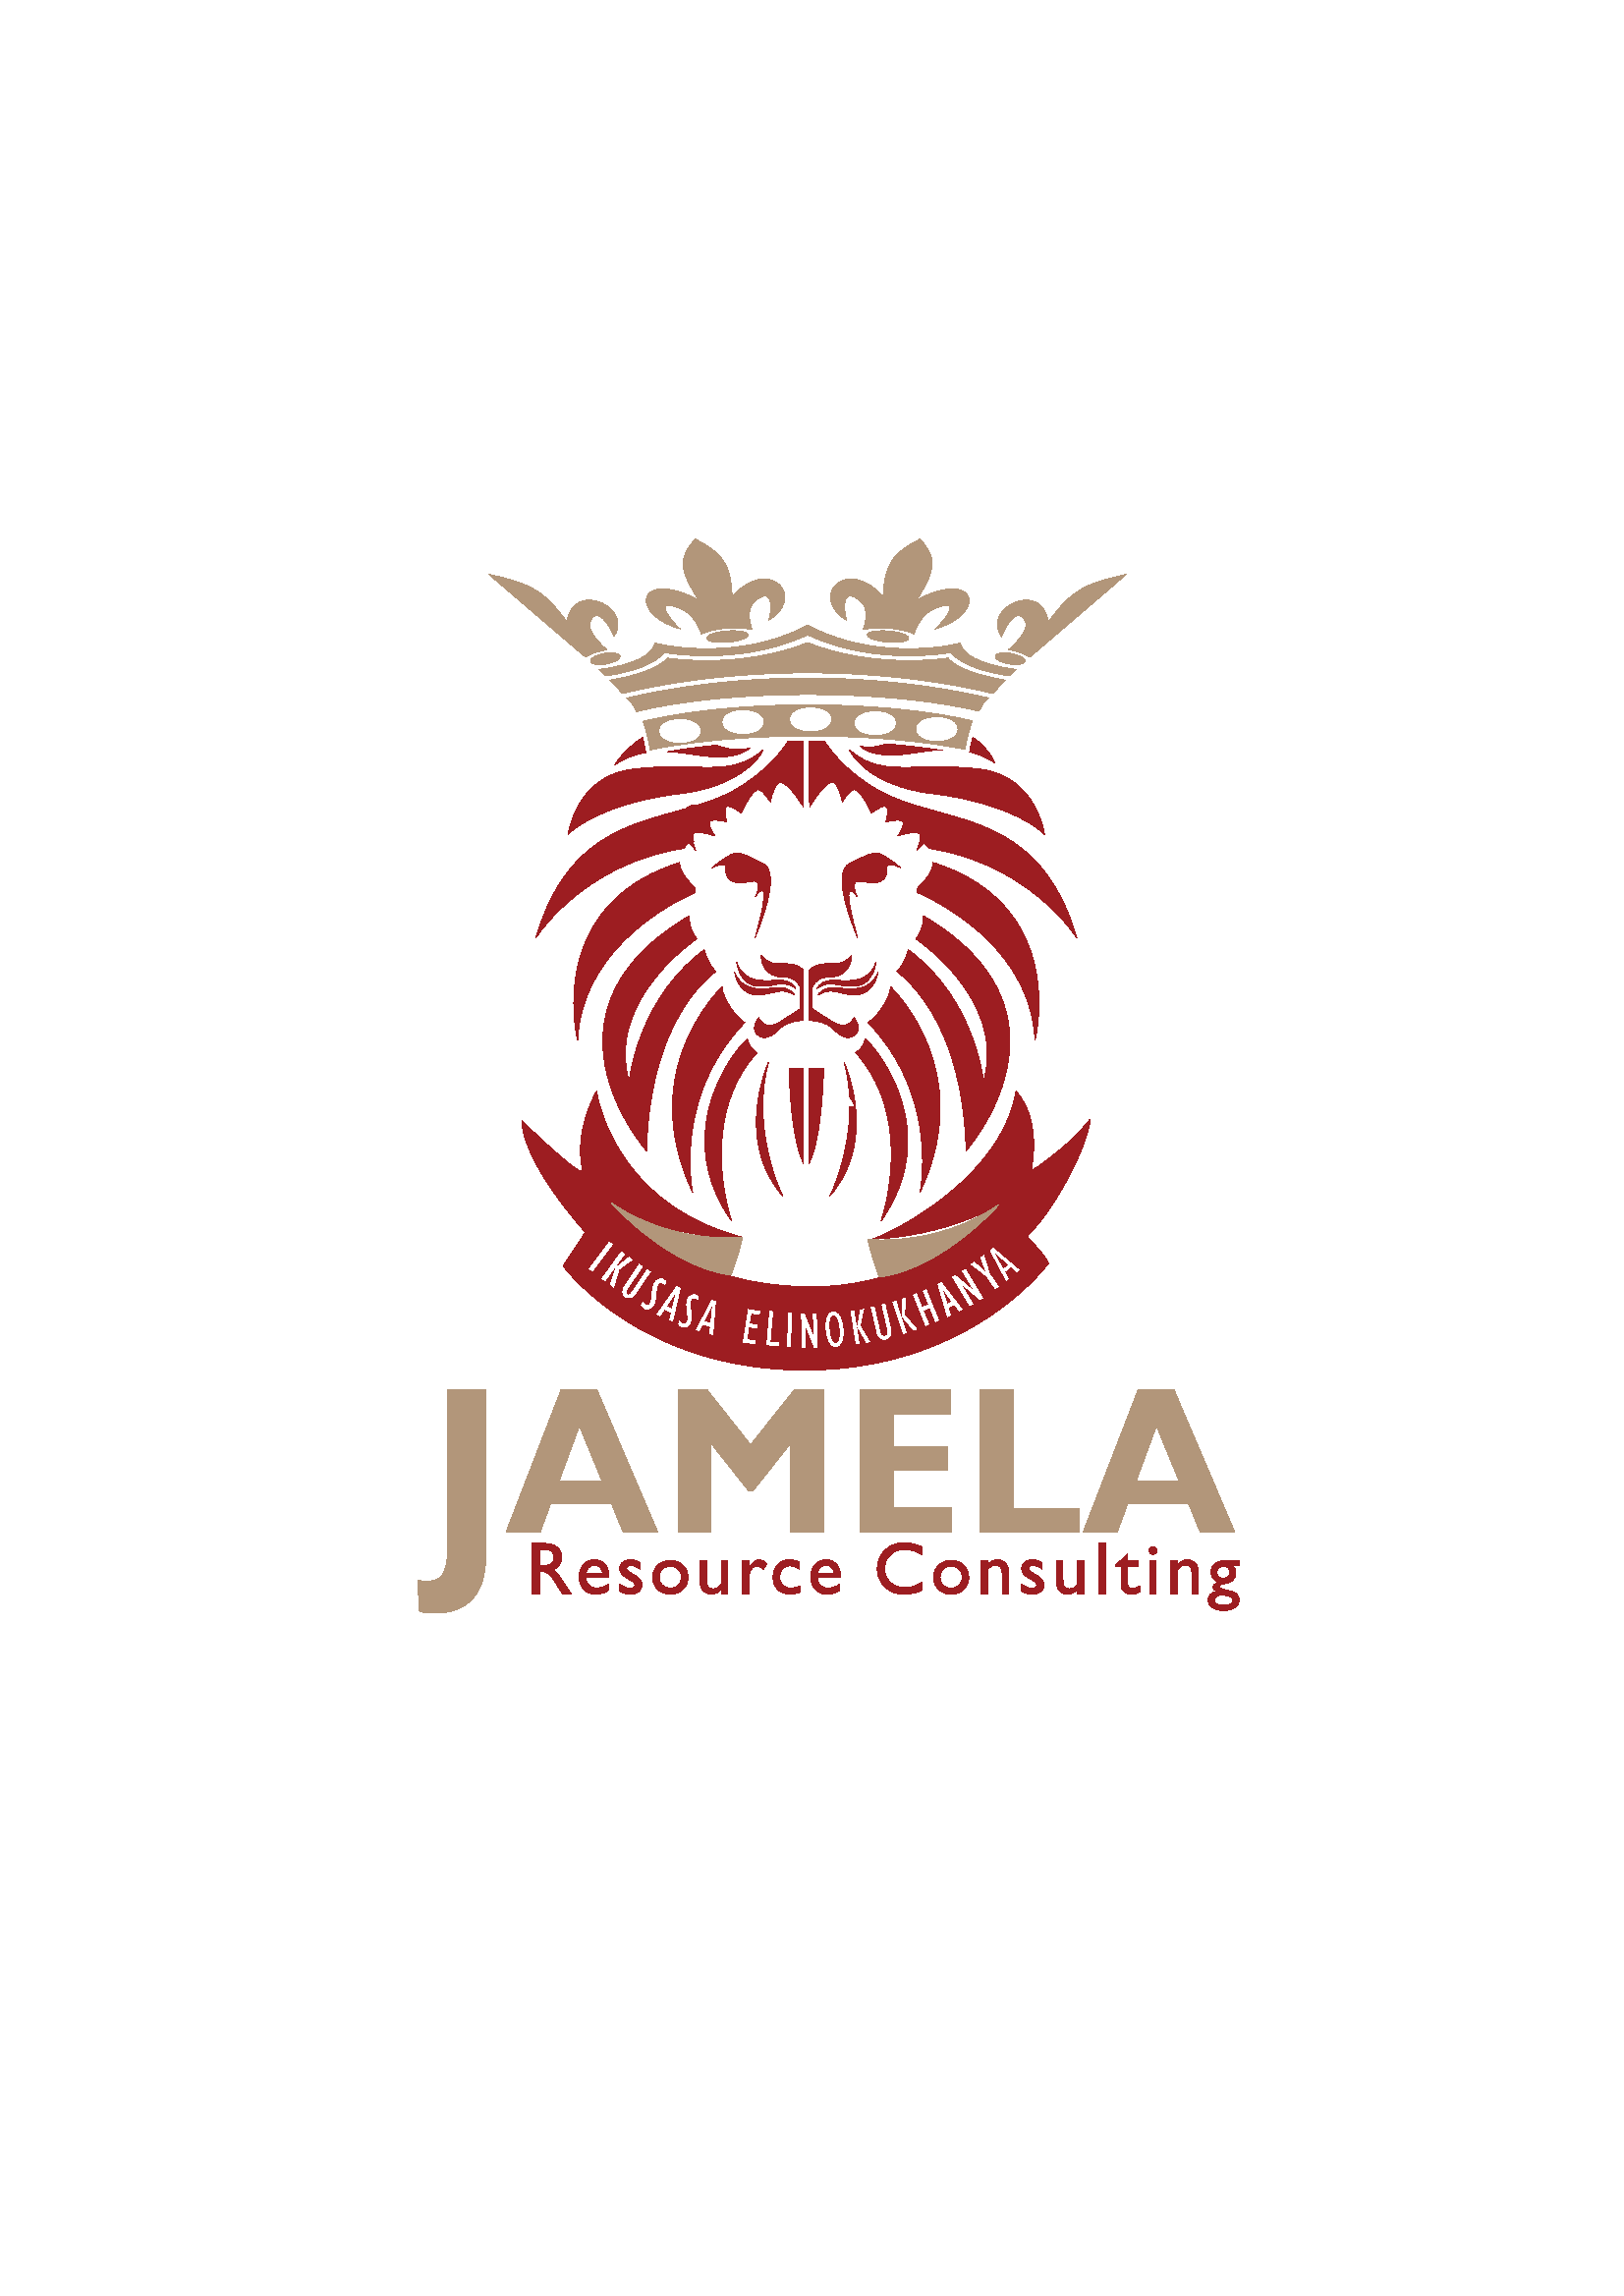 Jamela Resources Consulting Logo